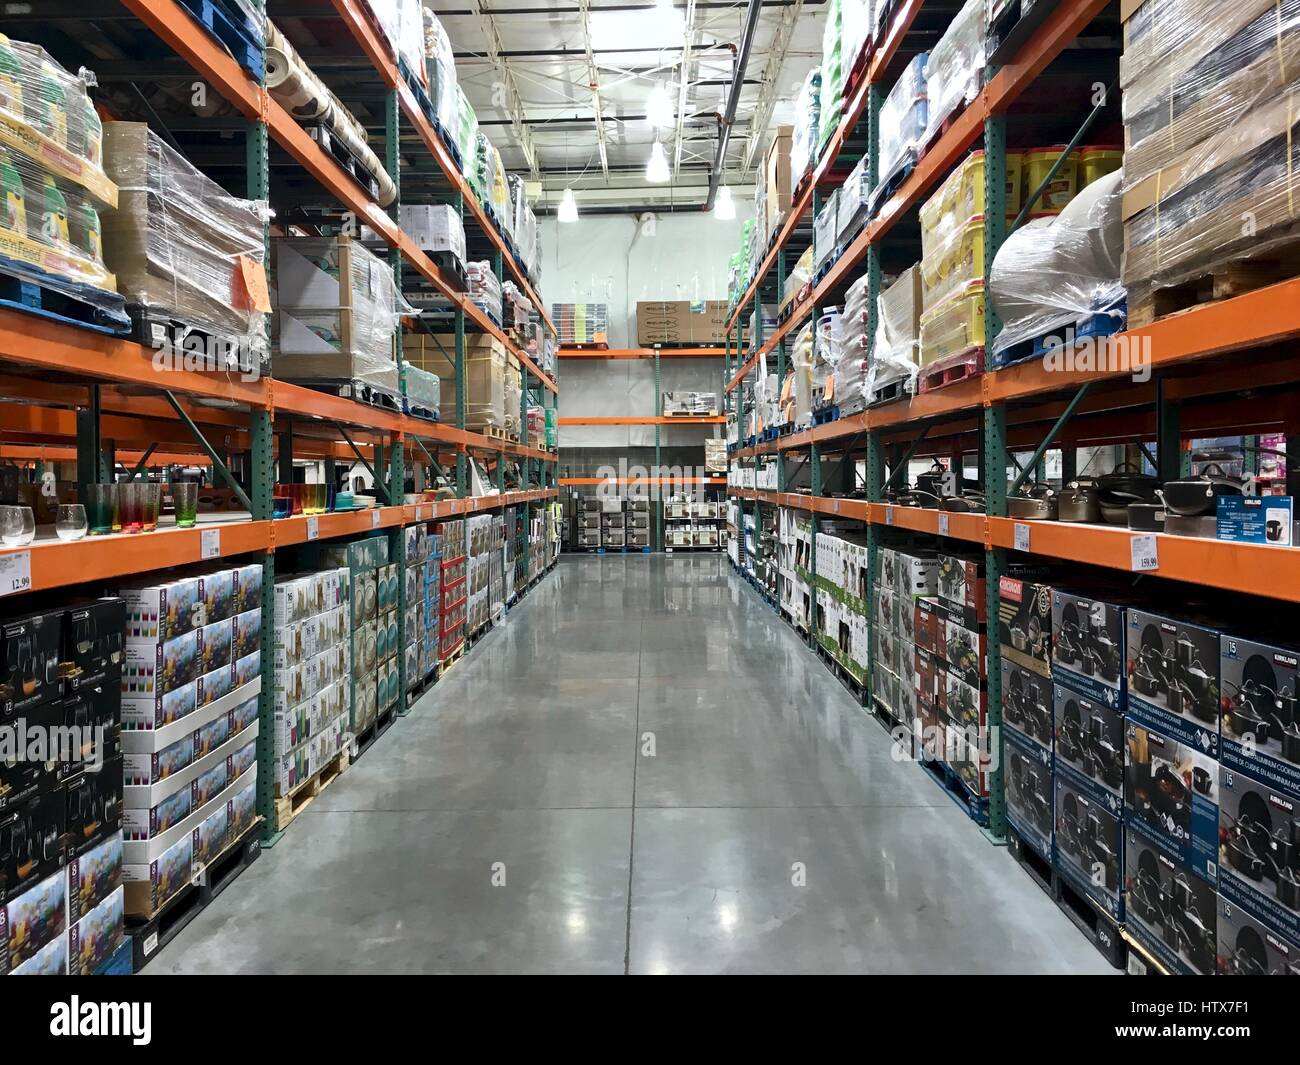 Costco Wholesale warehouse interior Stock Photo